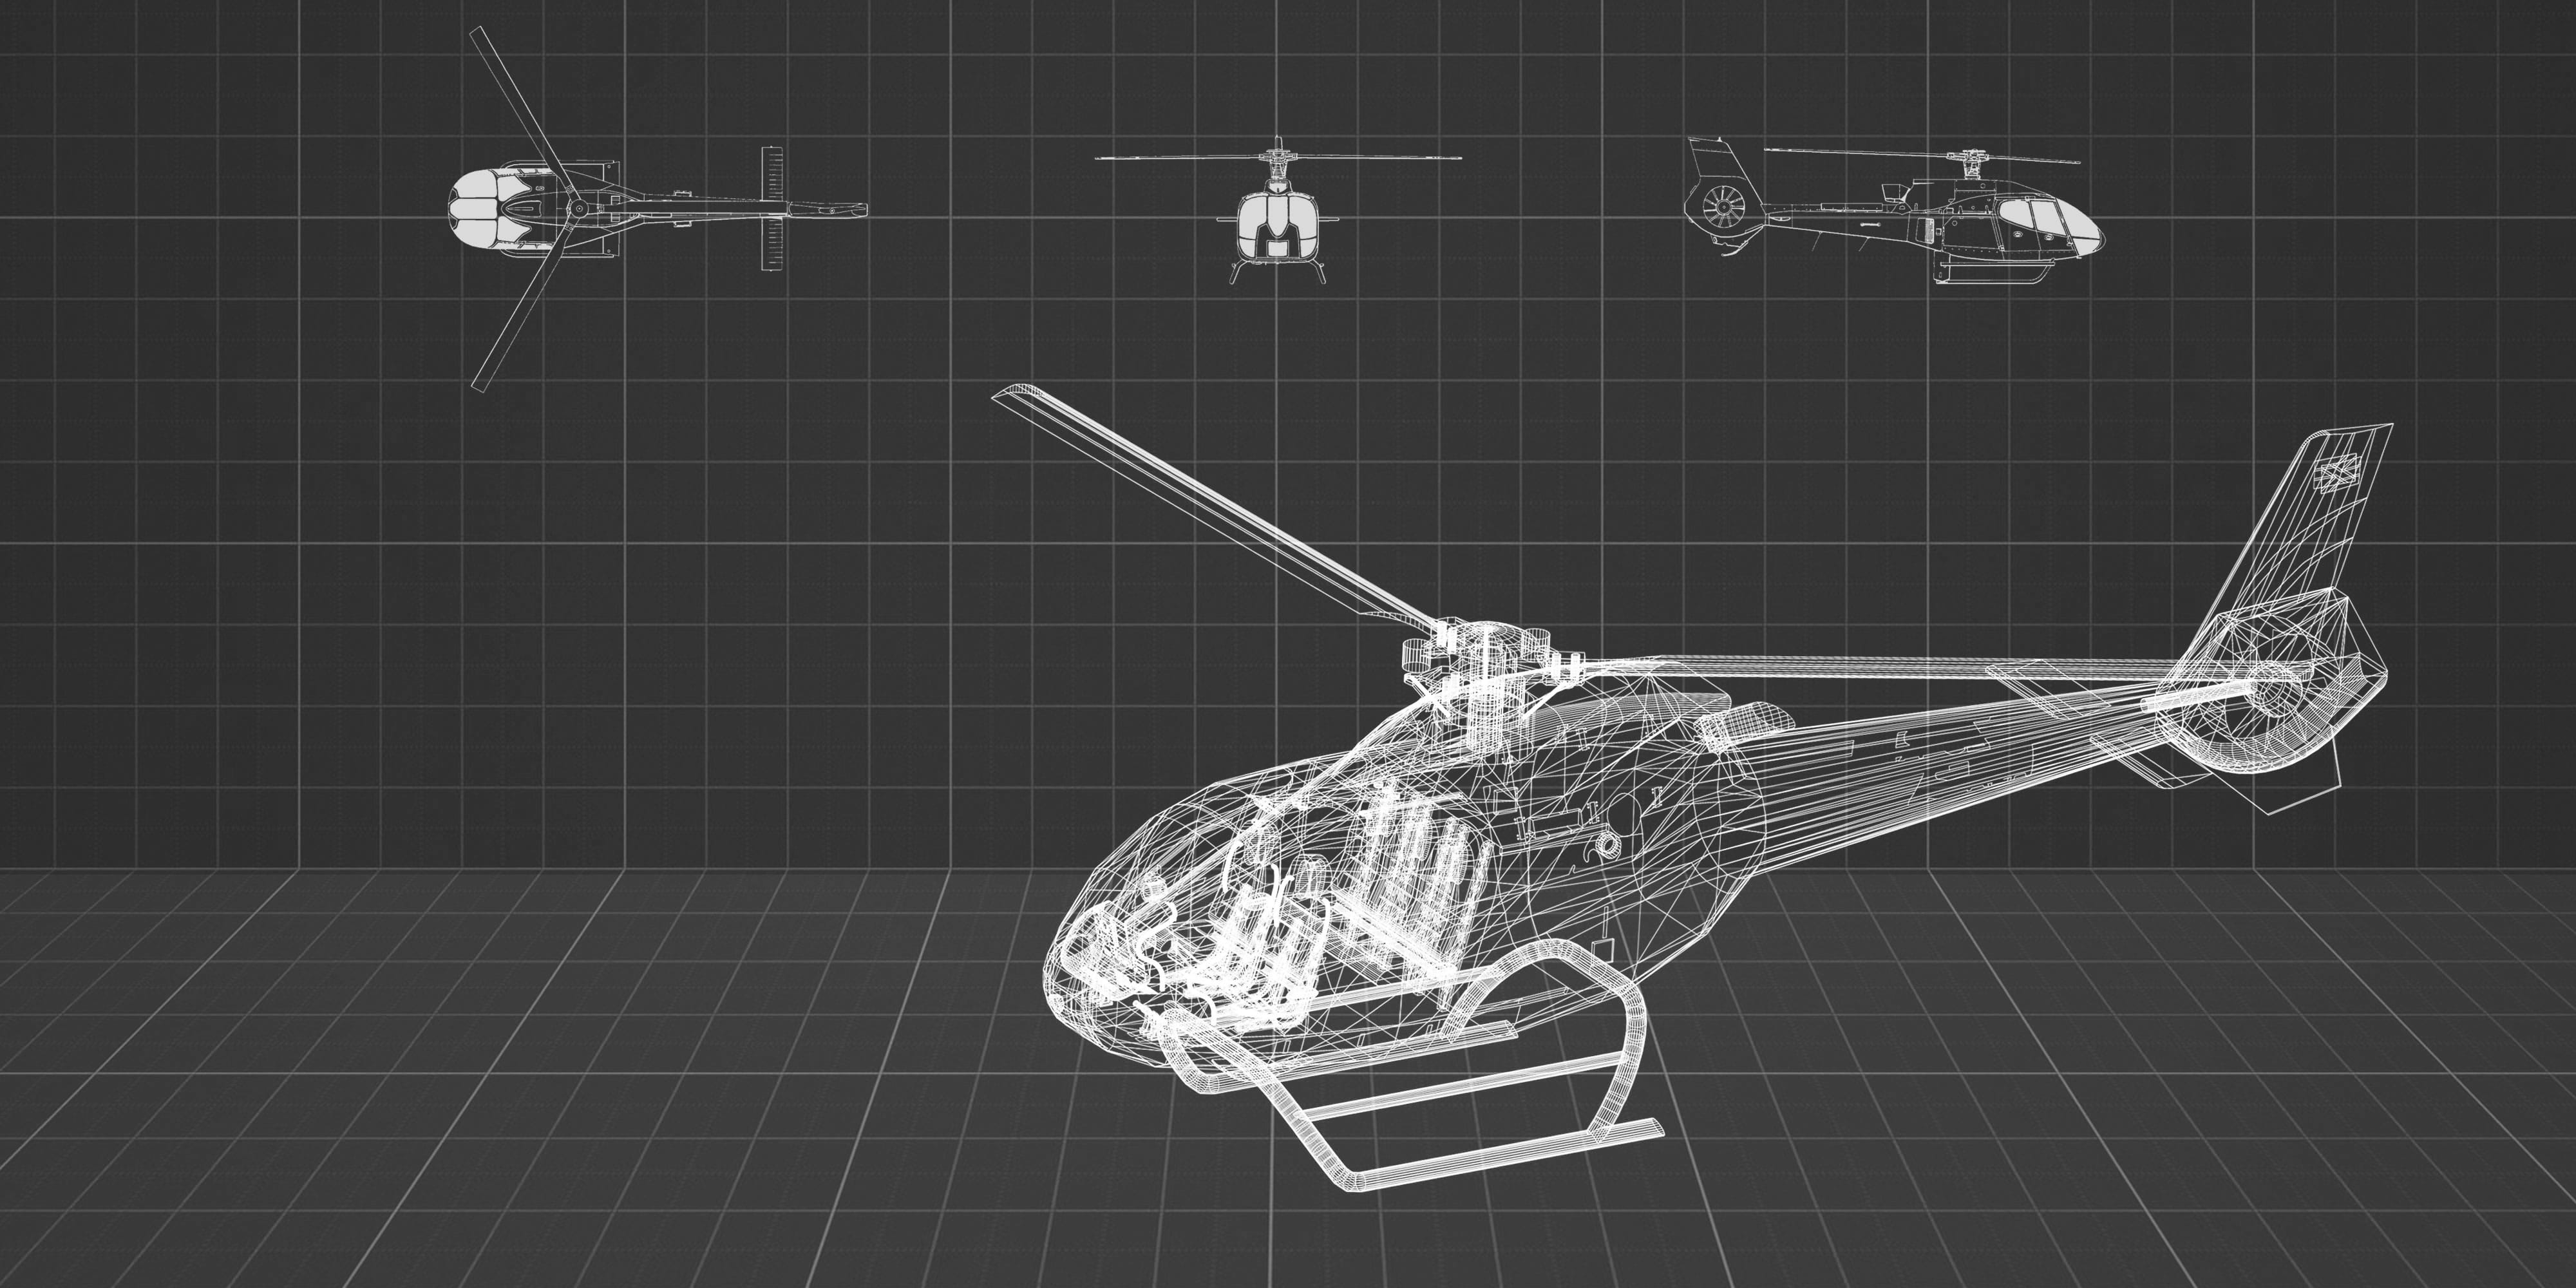 Helicopter design prints